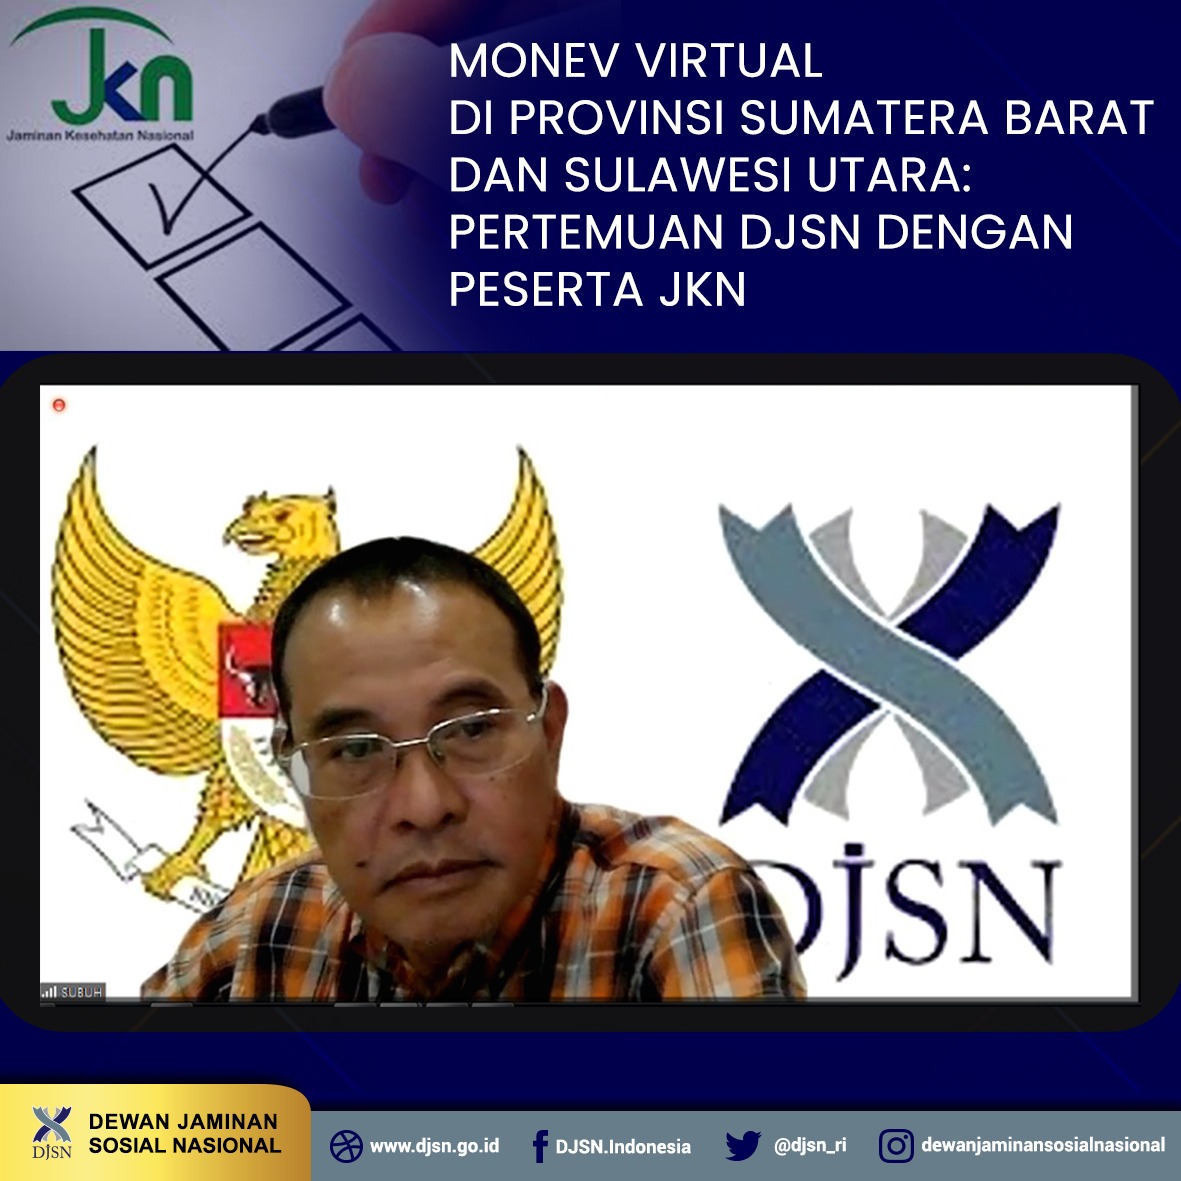 Monev Virtual Di Provinsi Sumatera Barat Dan Sulawesi Utara: Pertamuan DJSN Dengan Peserta JKN